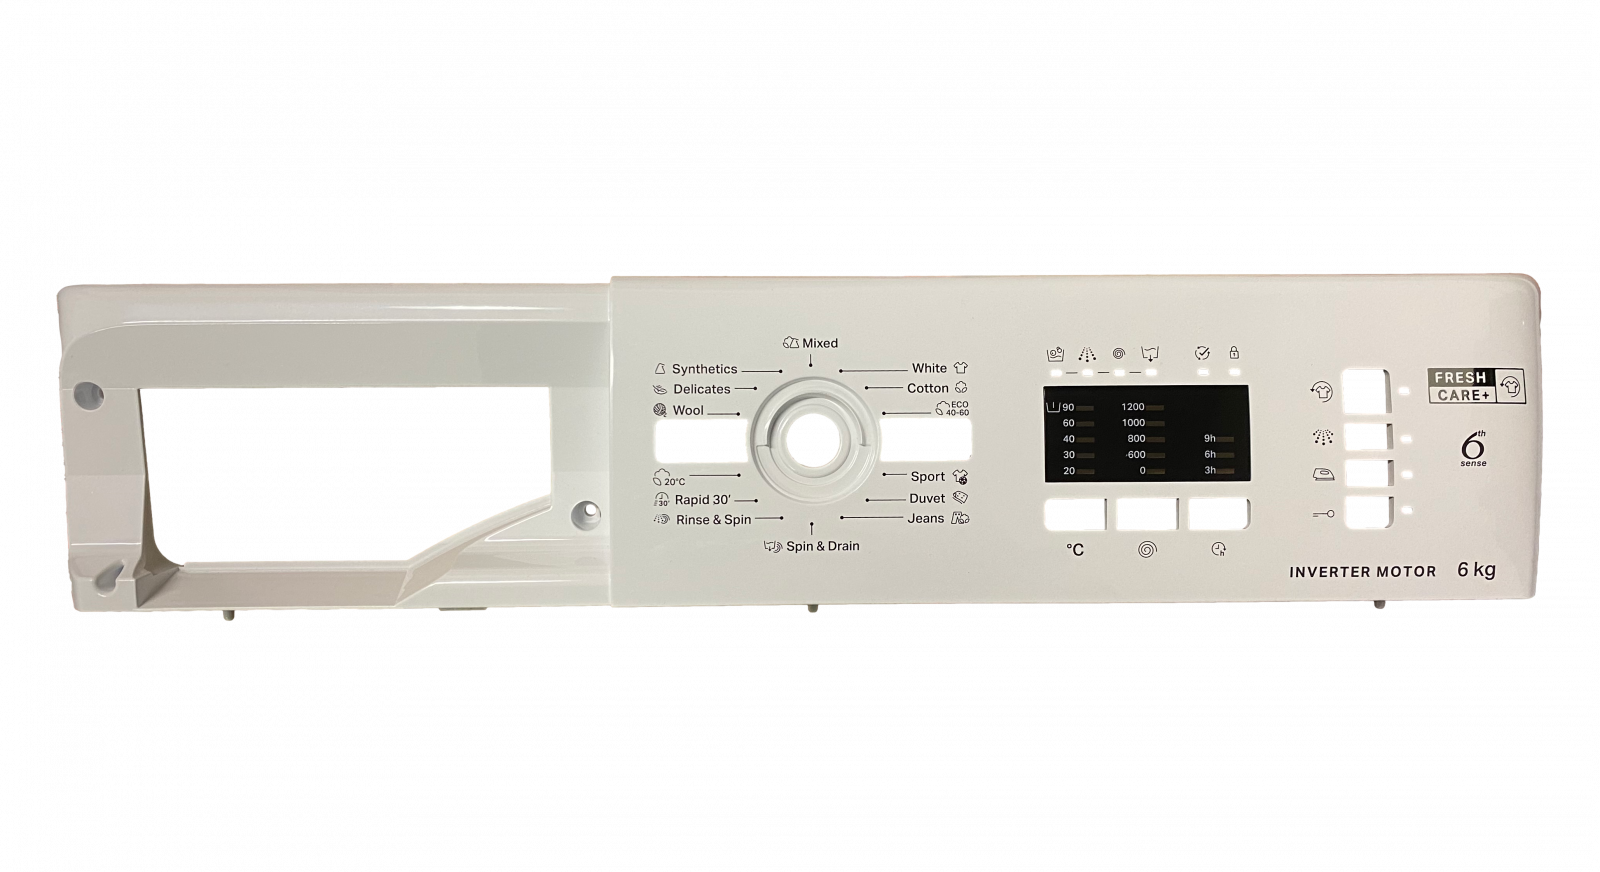 Panel ovládání, konzole praček Whirlpool Indesit - C00642097 Whirlpool / Indesit